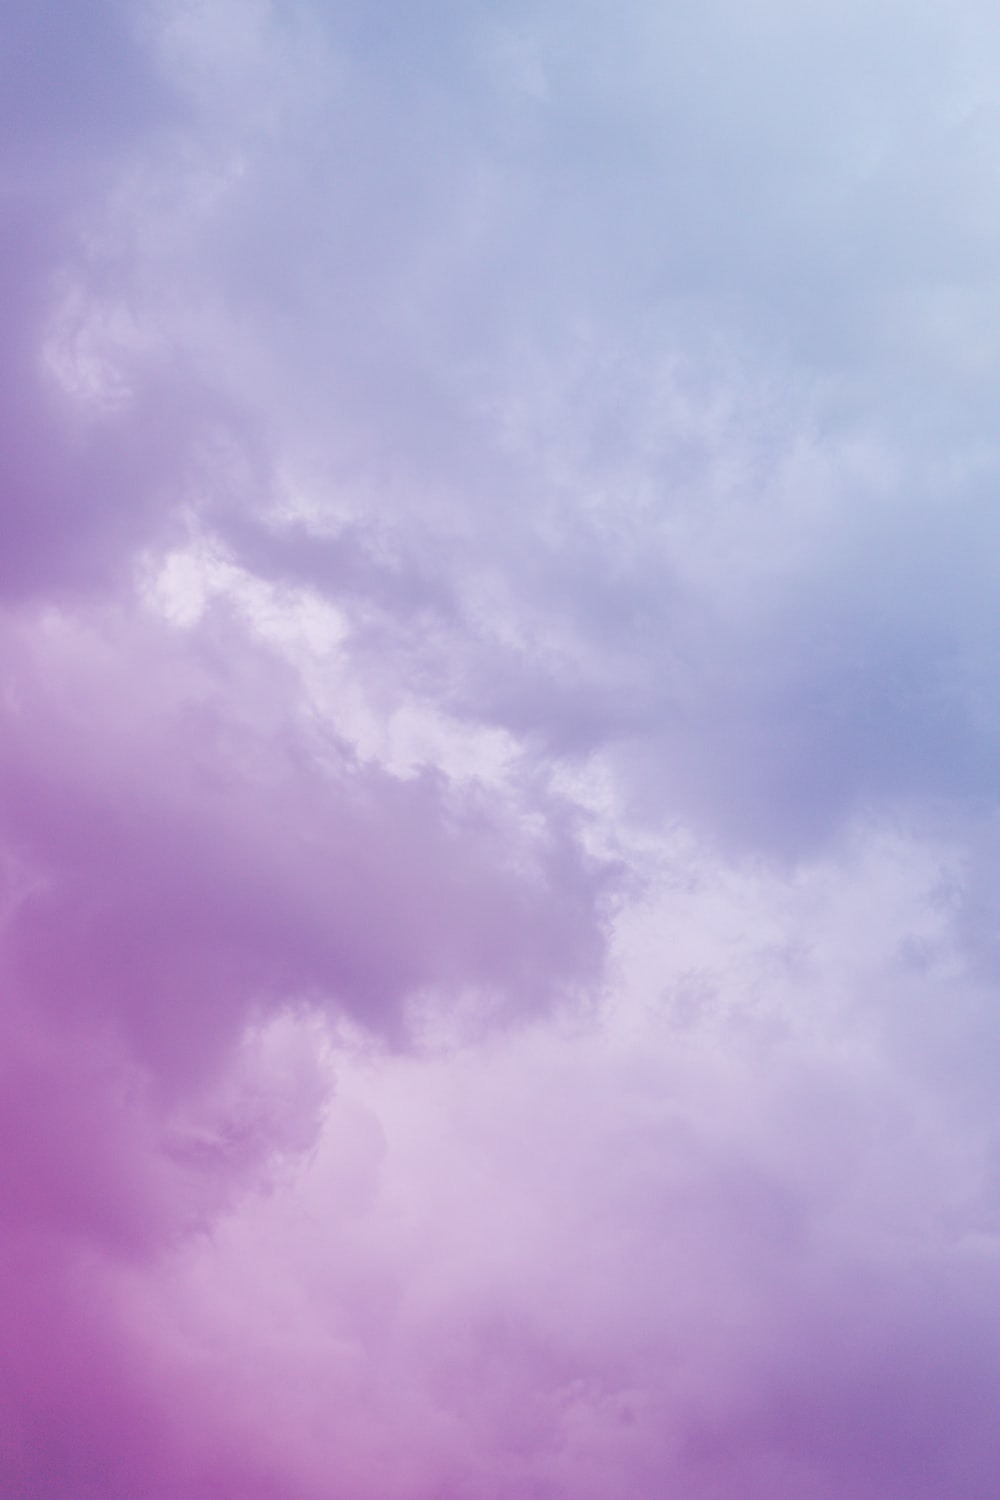 Purple Clouds Images  Free Download on Freepik